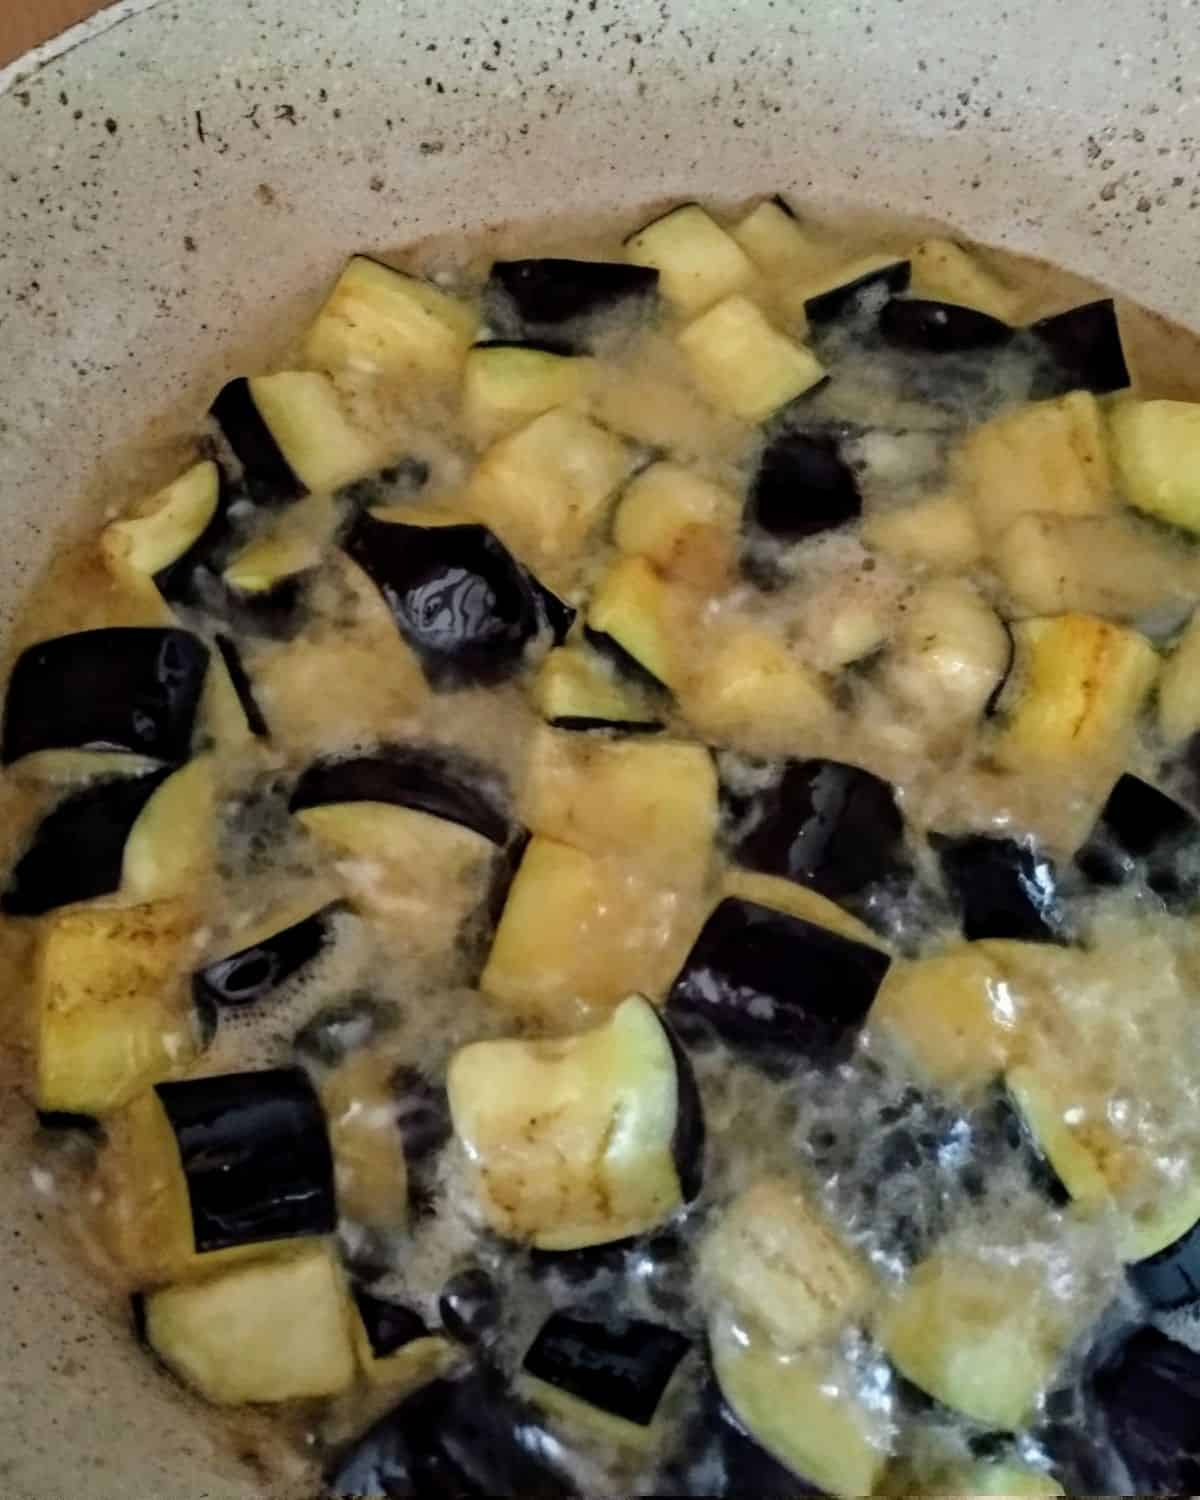 Process - fry eggplant cubes